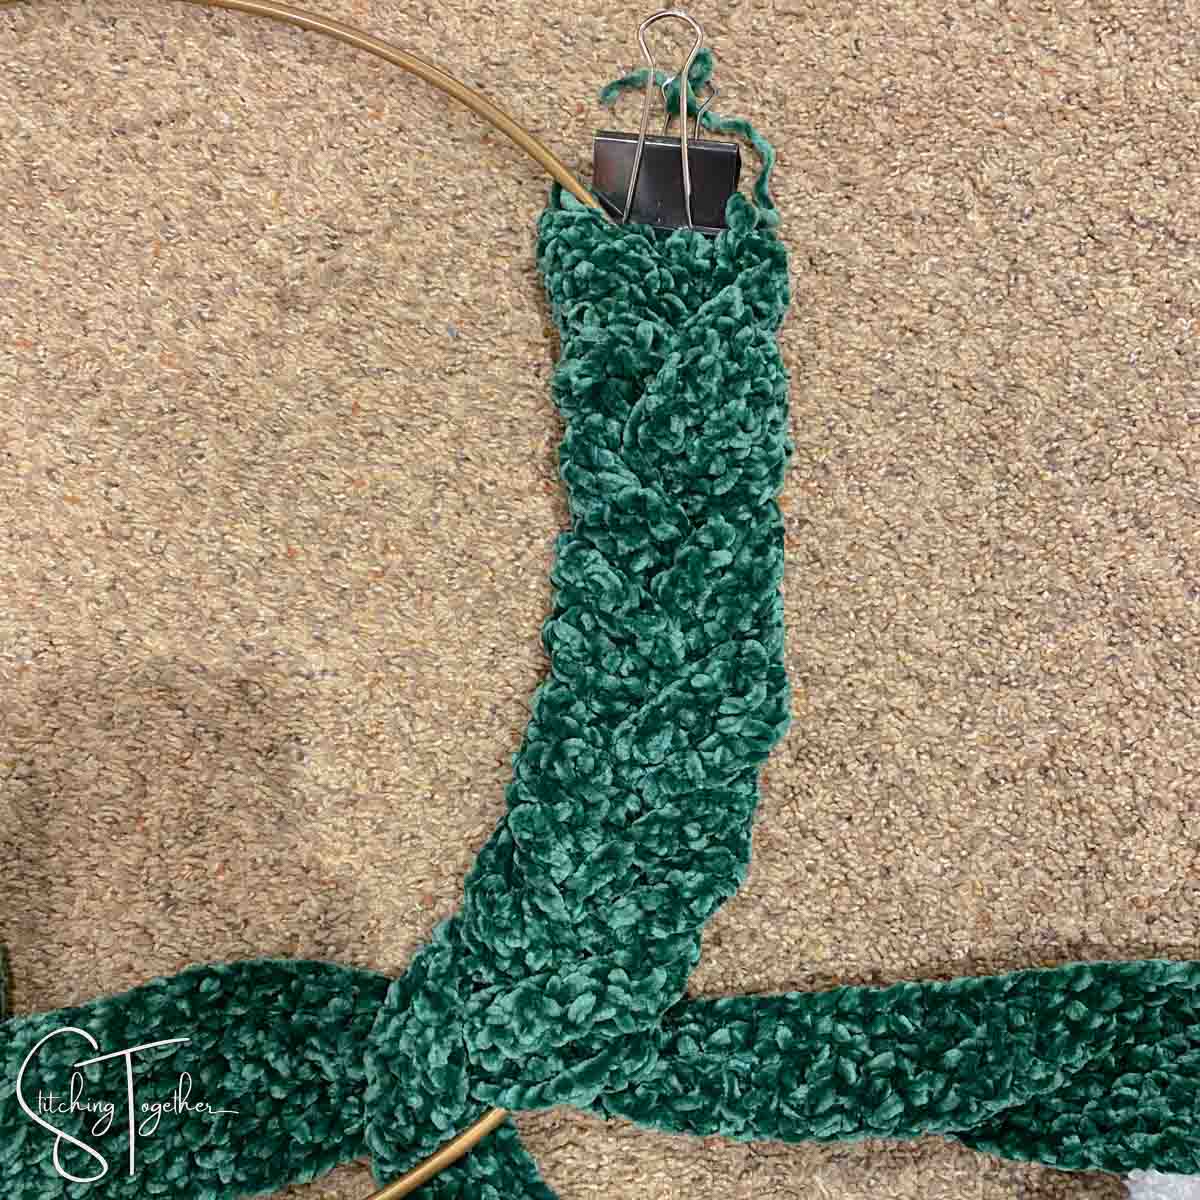 green crochet fabric being braided around a metal hoop